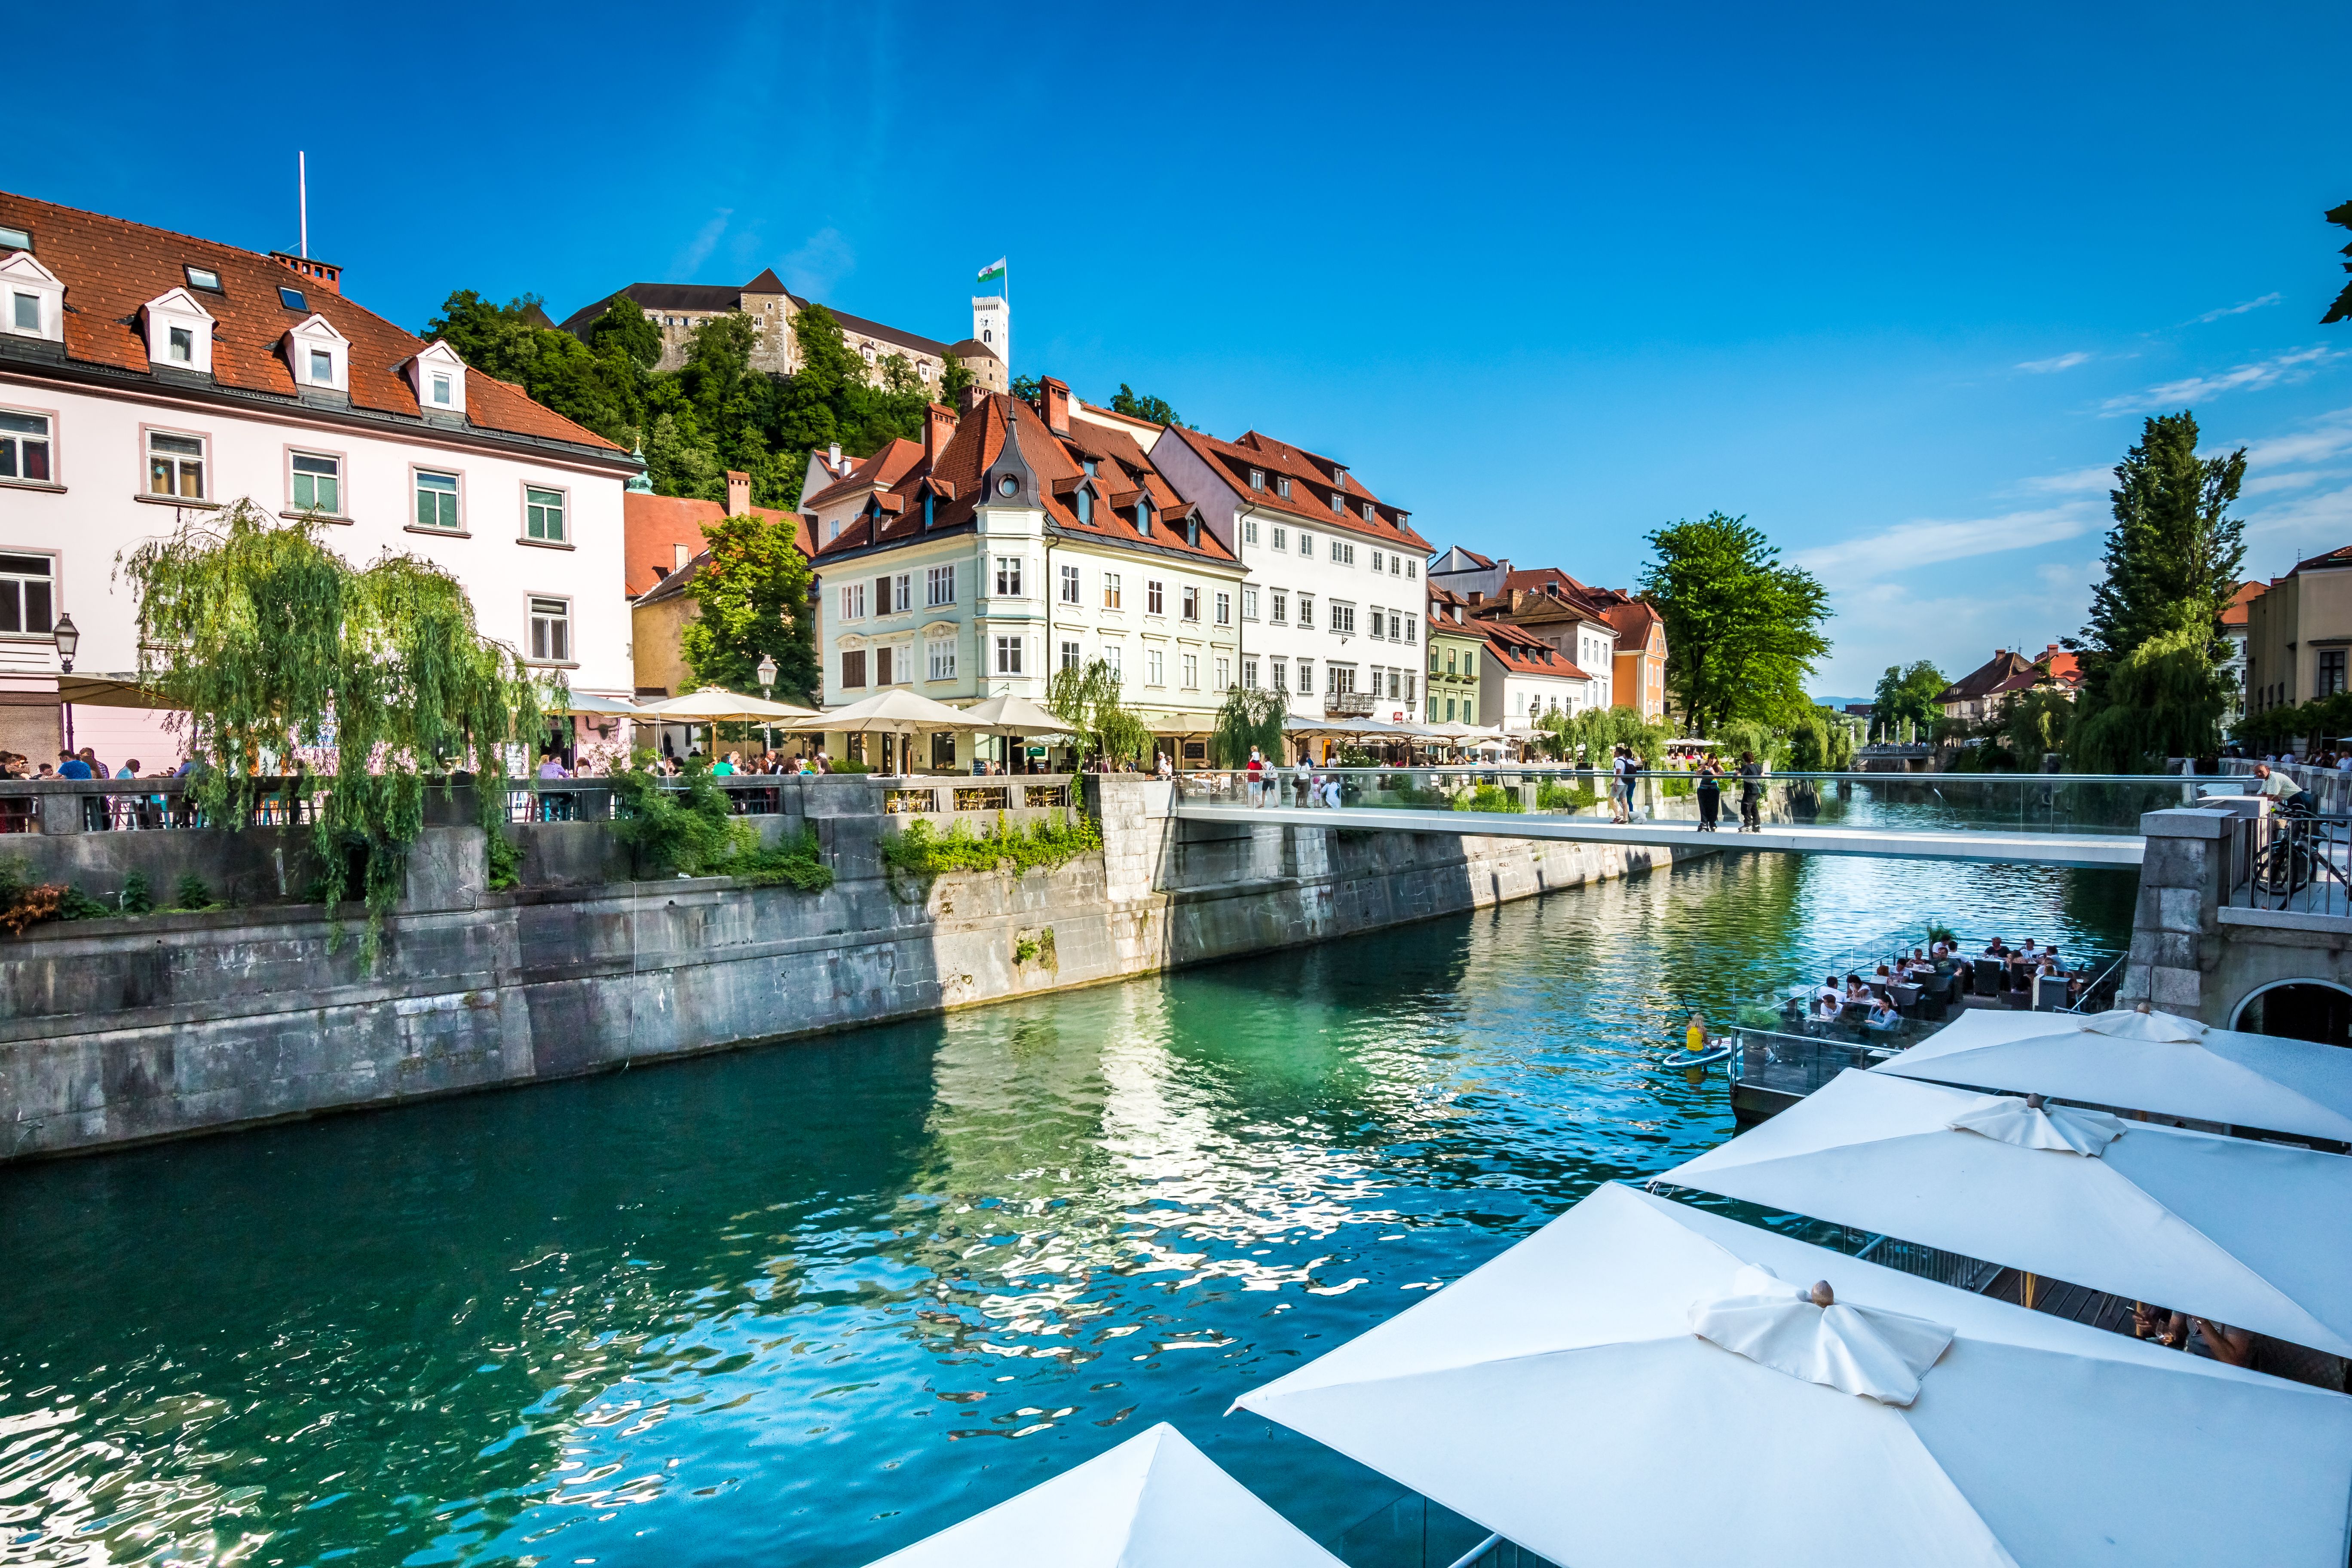 Visit And Explore Ljubljana, the Capital City of Slovenia